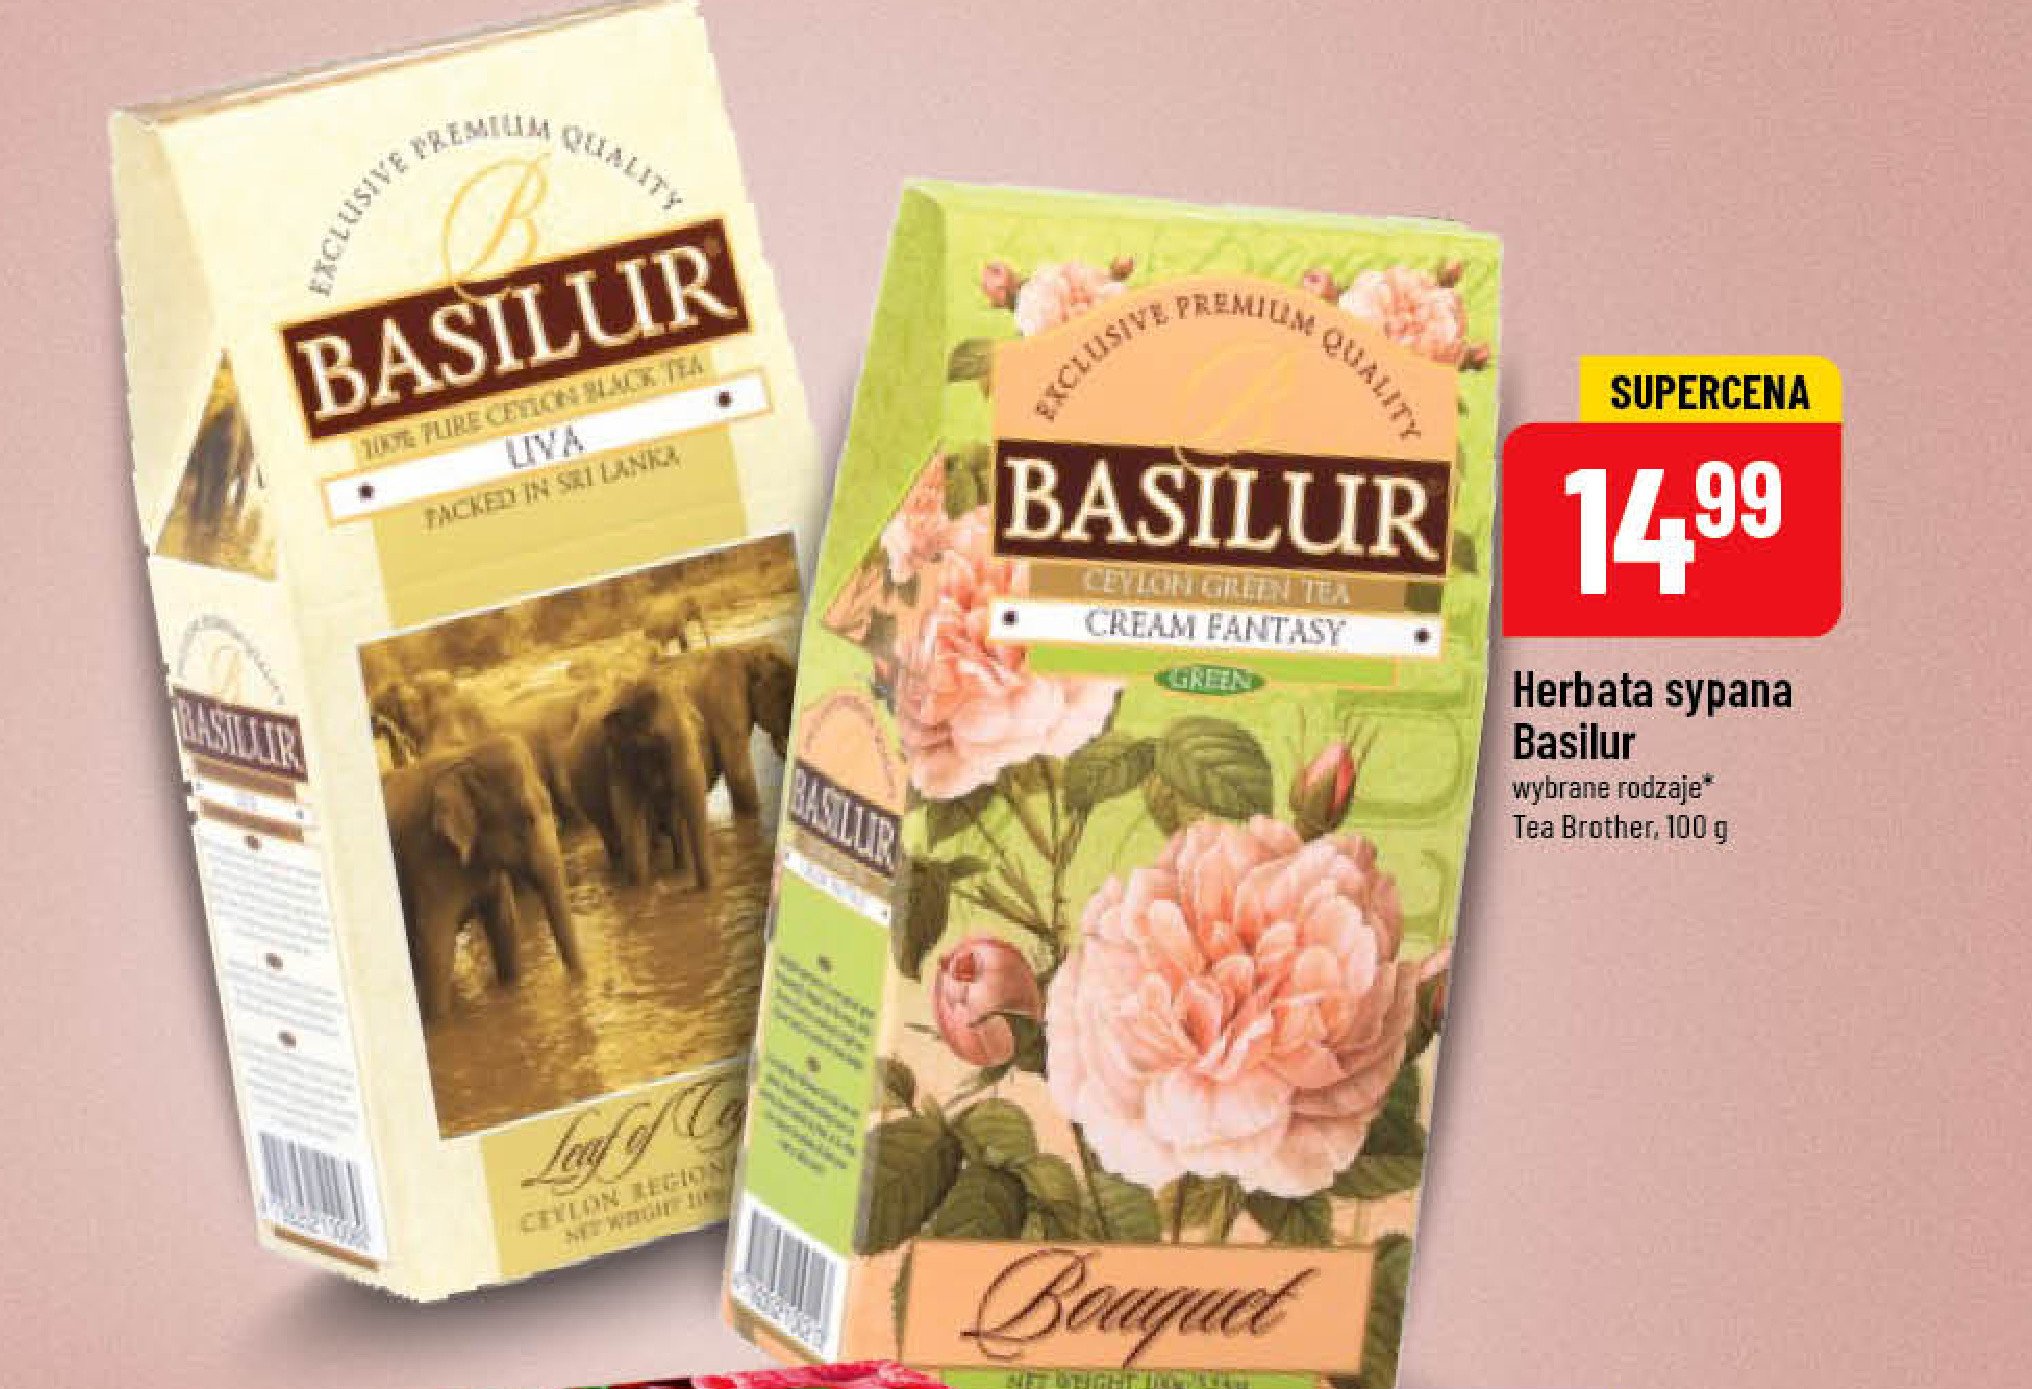 Herbata cream fantasy Basilur promocja